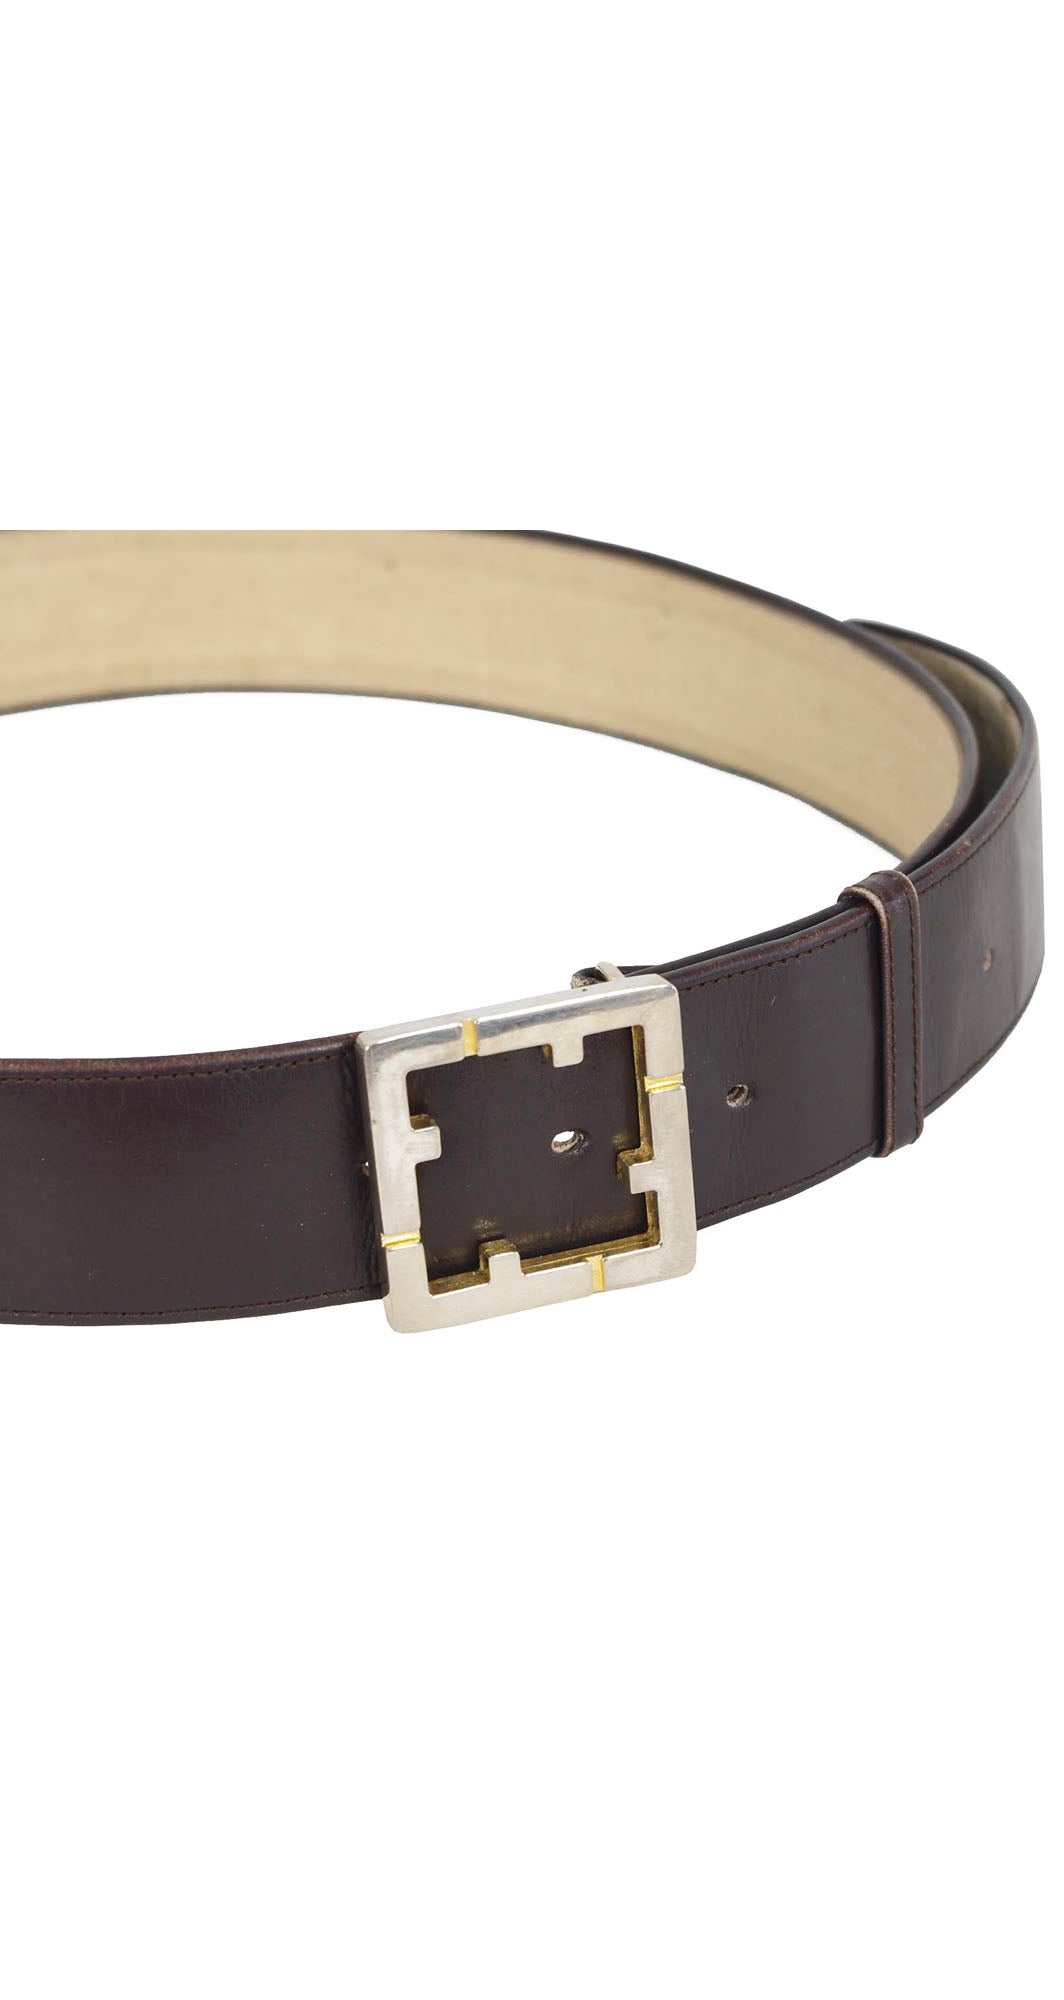 1970s "F" Buckle Brown Leather Waist Belt